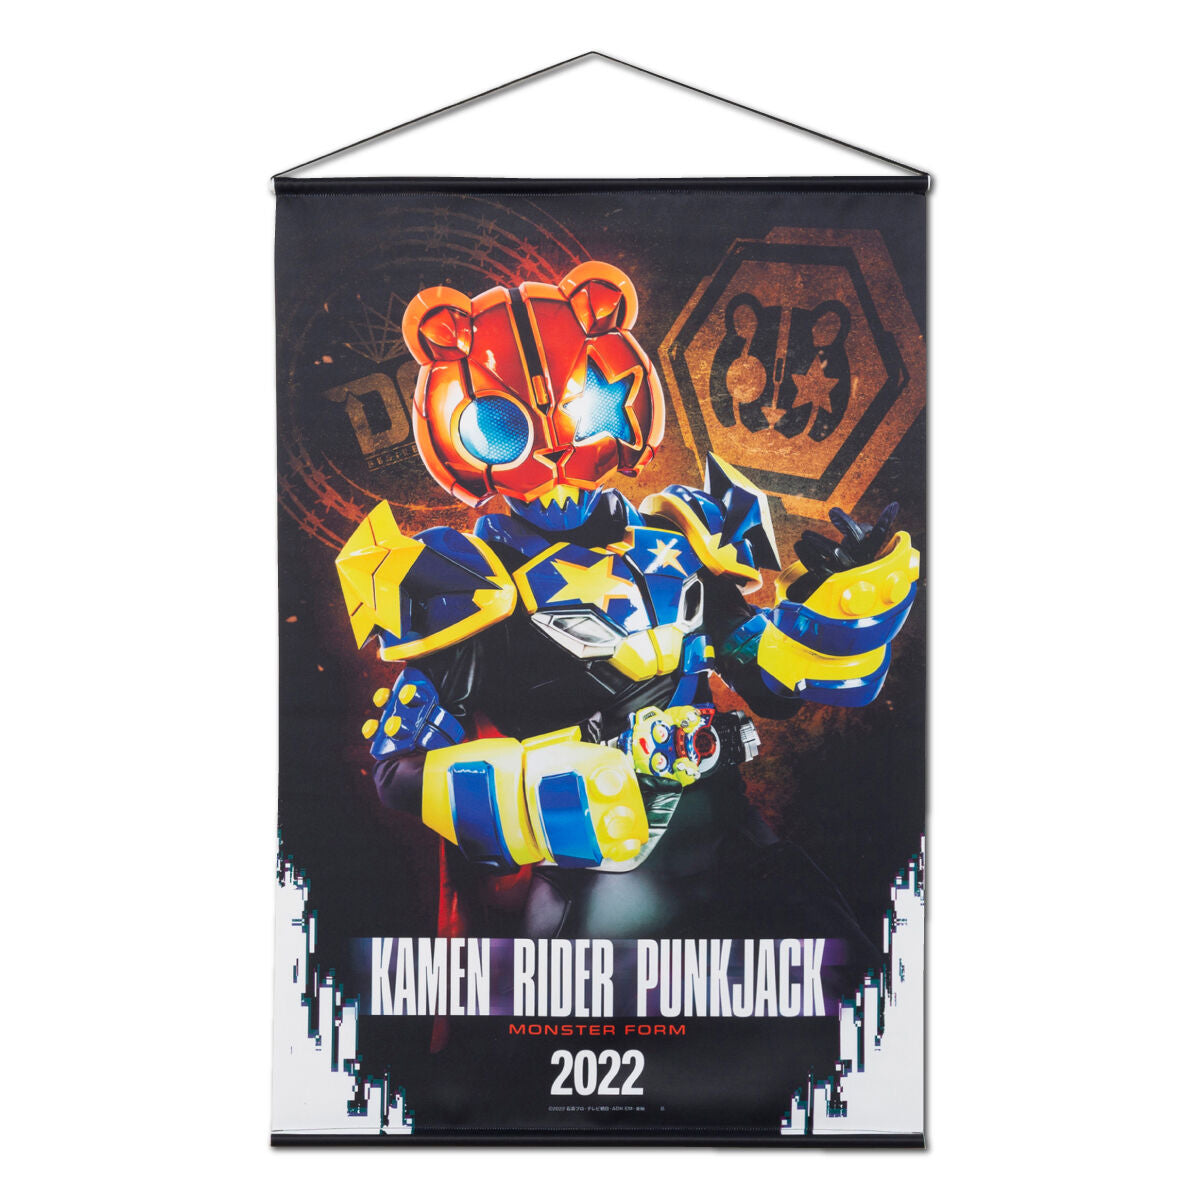 [PREORDER] Kamen Rider Geats Hanging Wall Tapestries